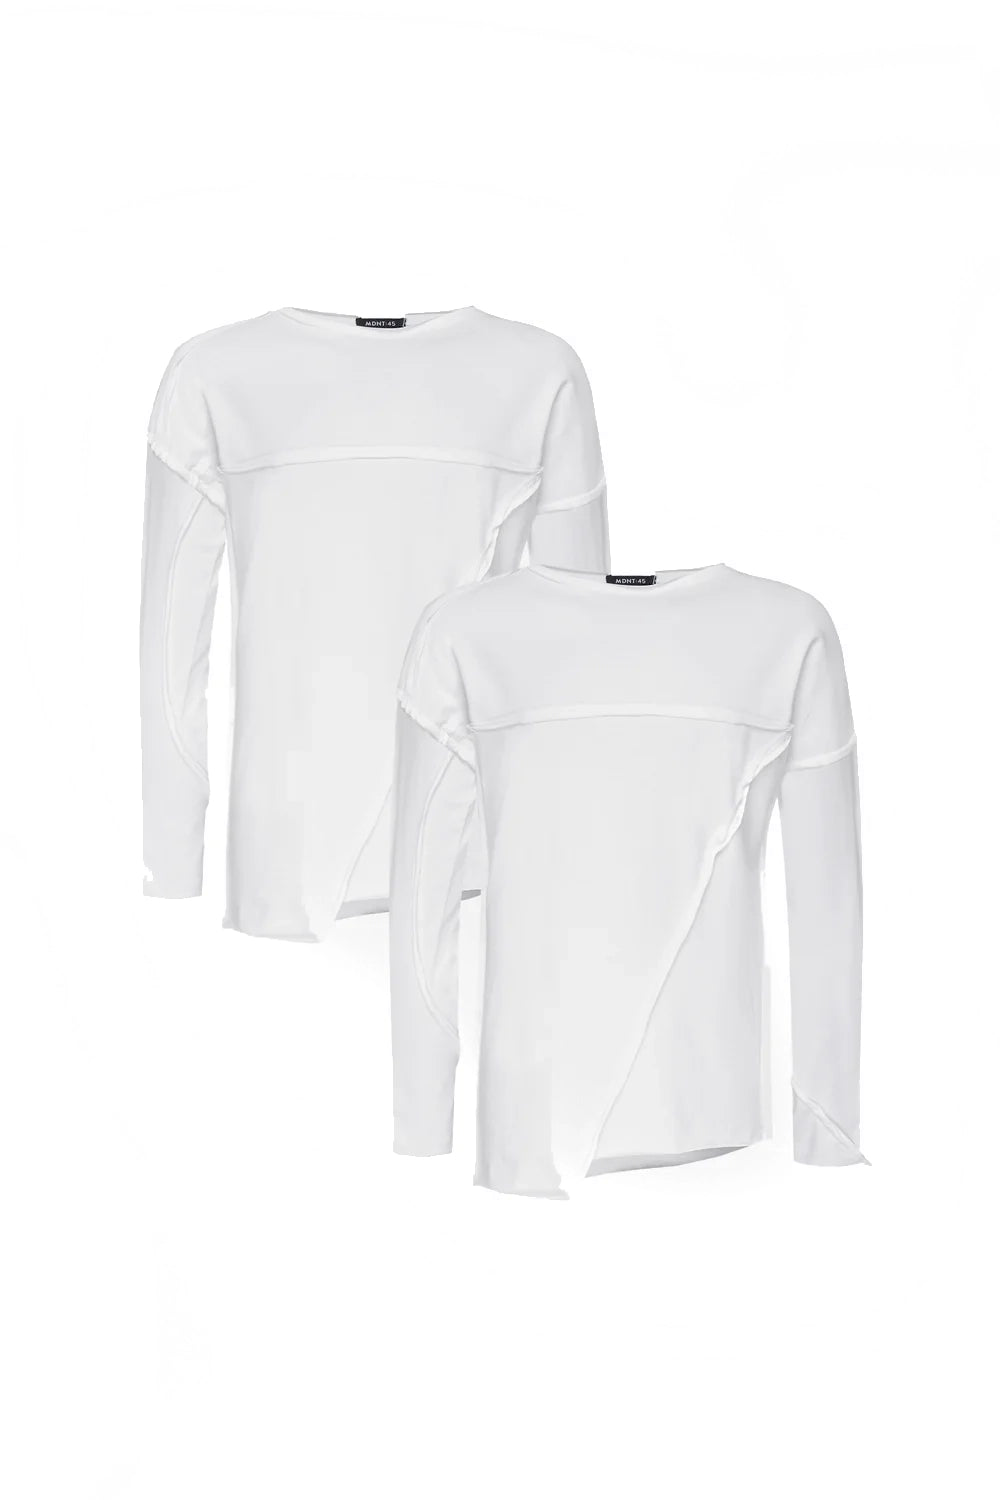 Bundle: 2x White Long Sleeve T-shirts